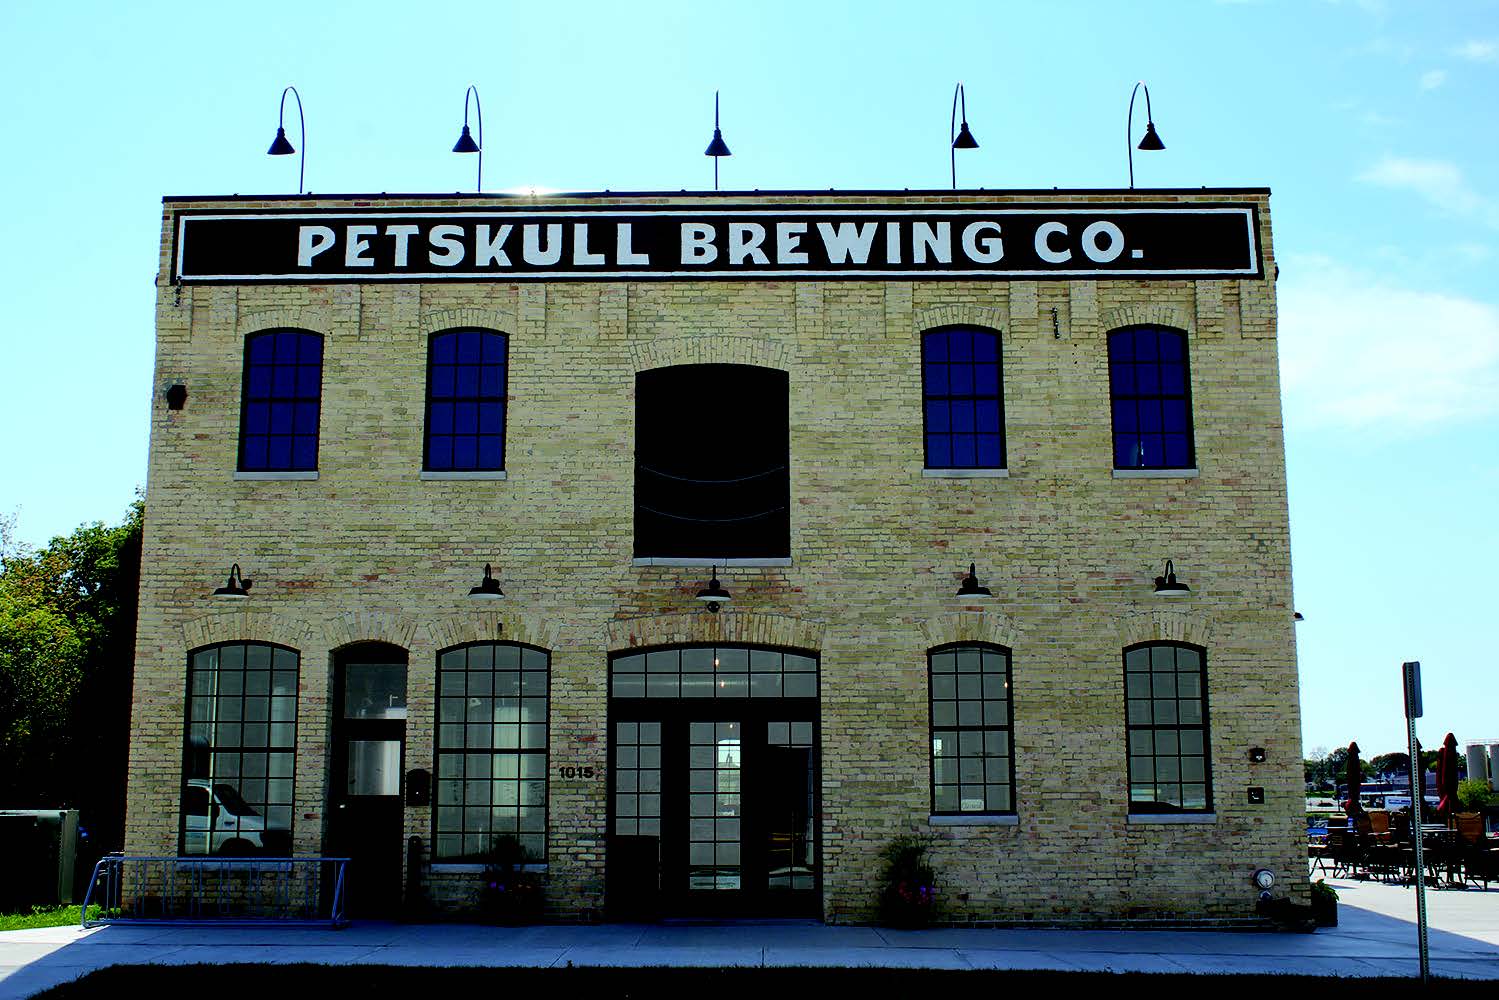 Petskull brewing company exterior